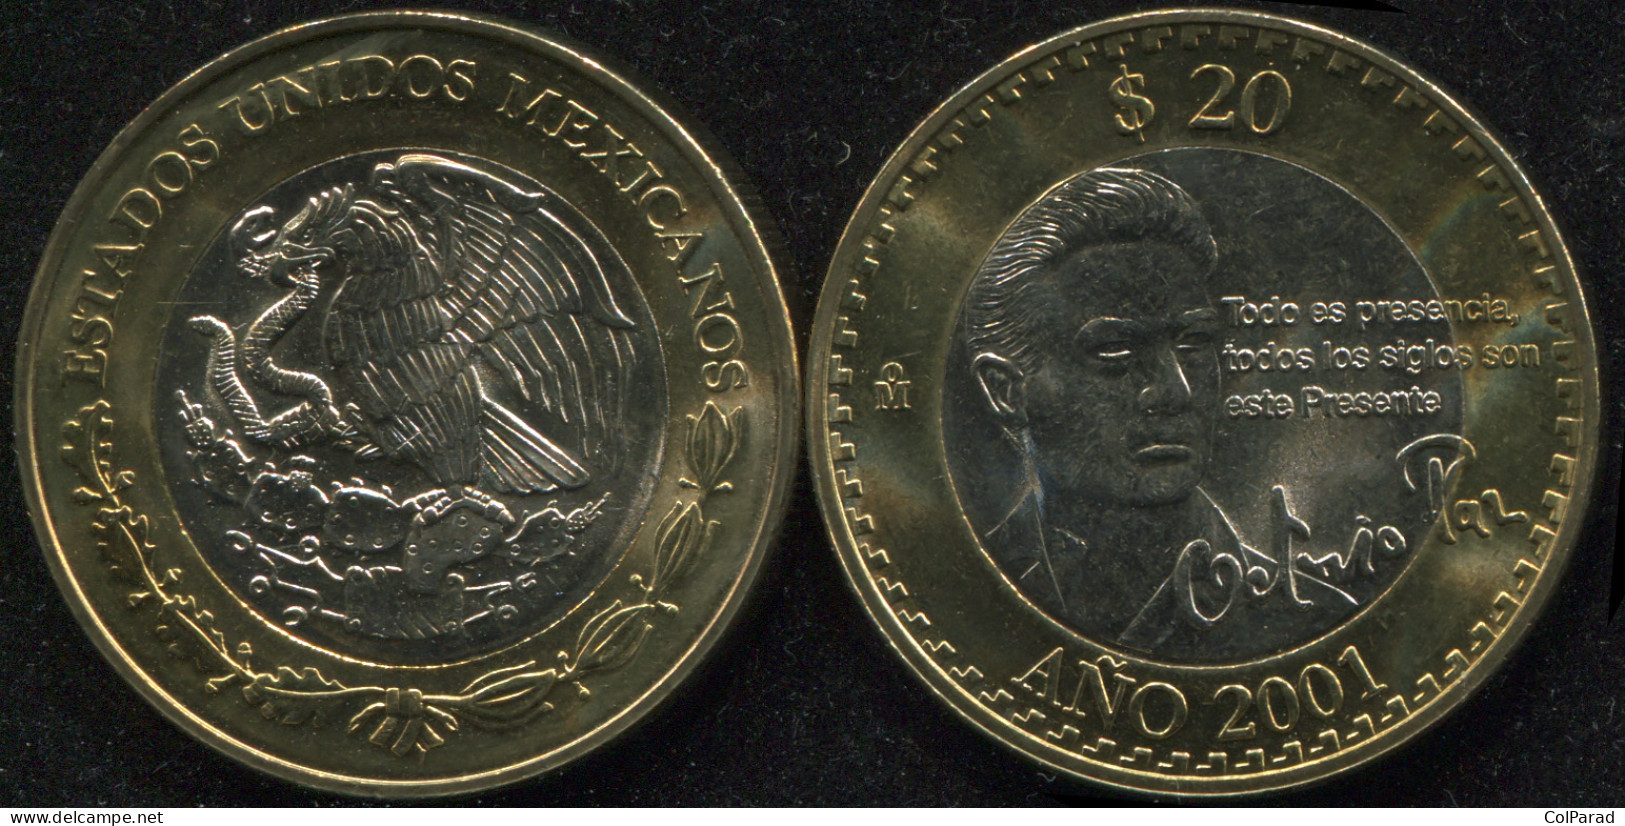 MEXICO COIN 20 PESOS - KM#638 Bi-Metallic Unc - 2001 - Octavio Paz, Poet - México